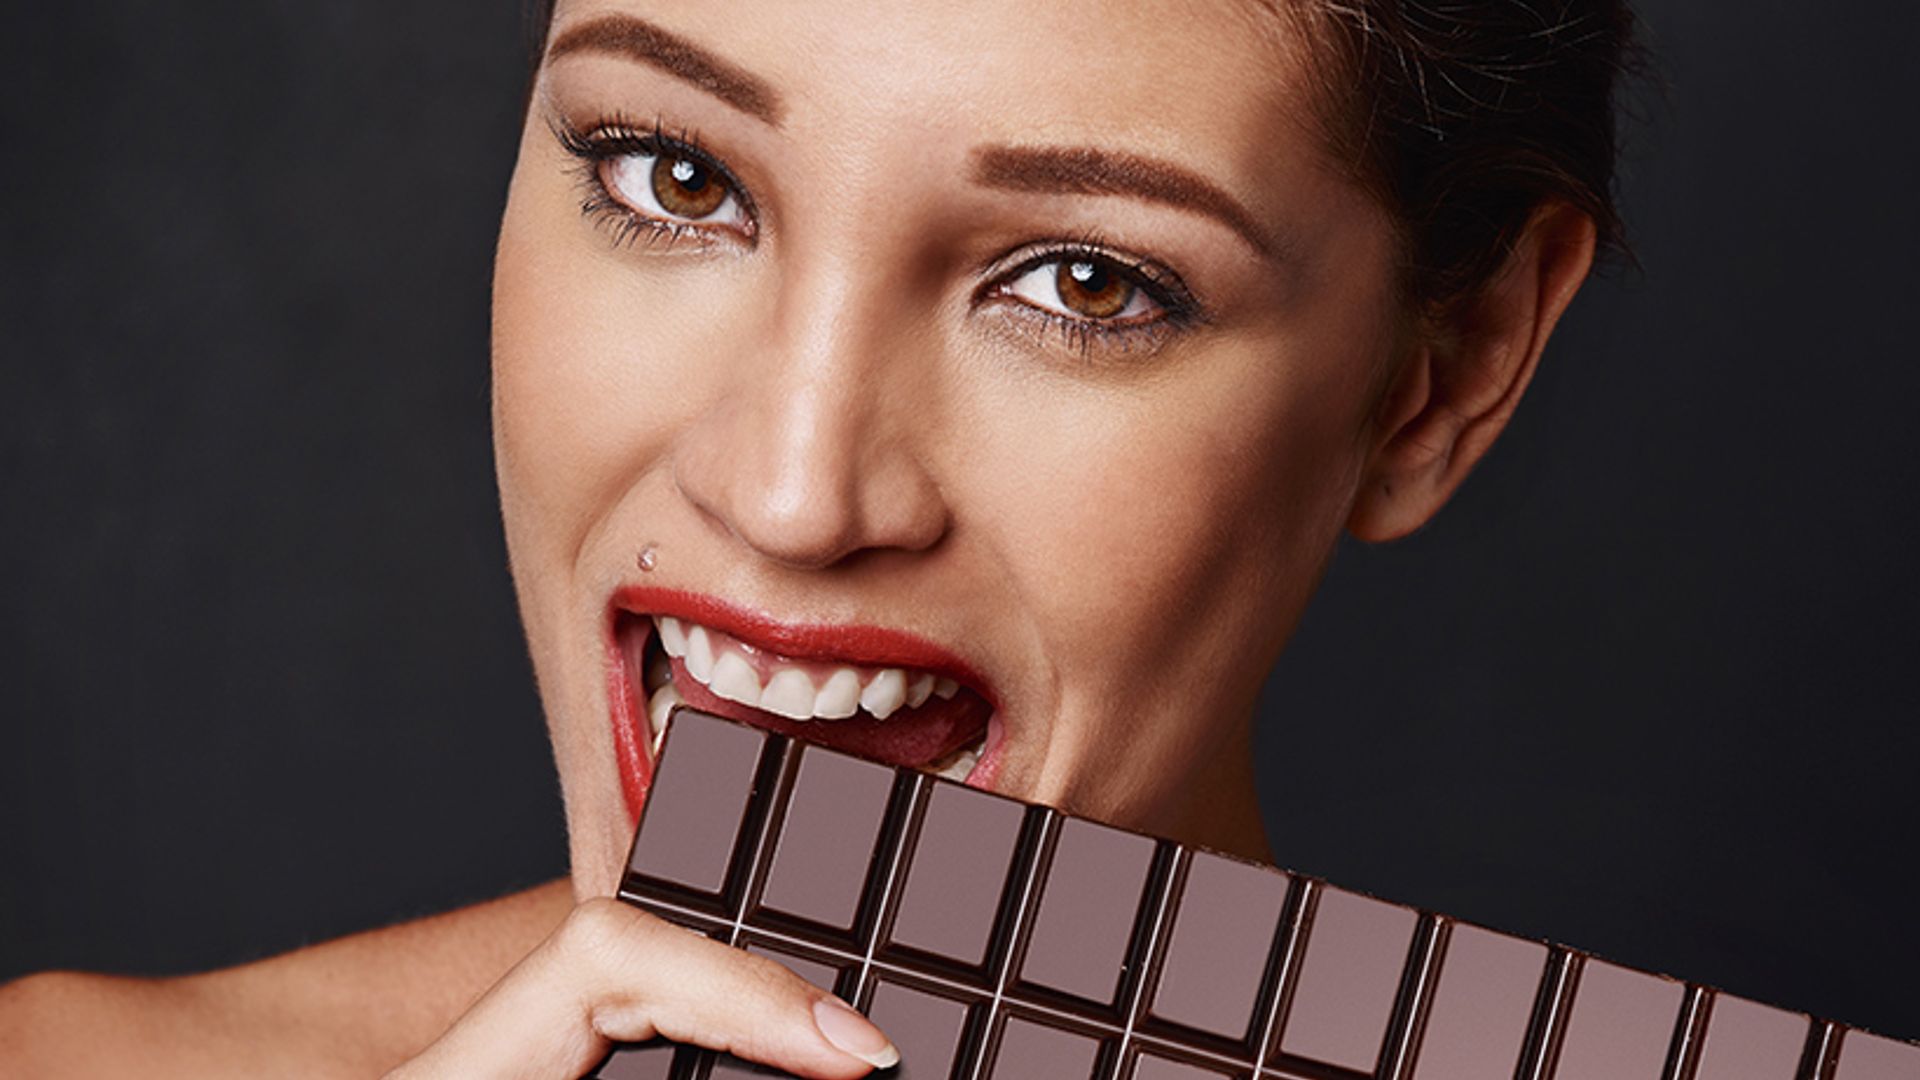 Great news chocoholics! New study reveals the benefits of dark chocolate